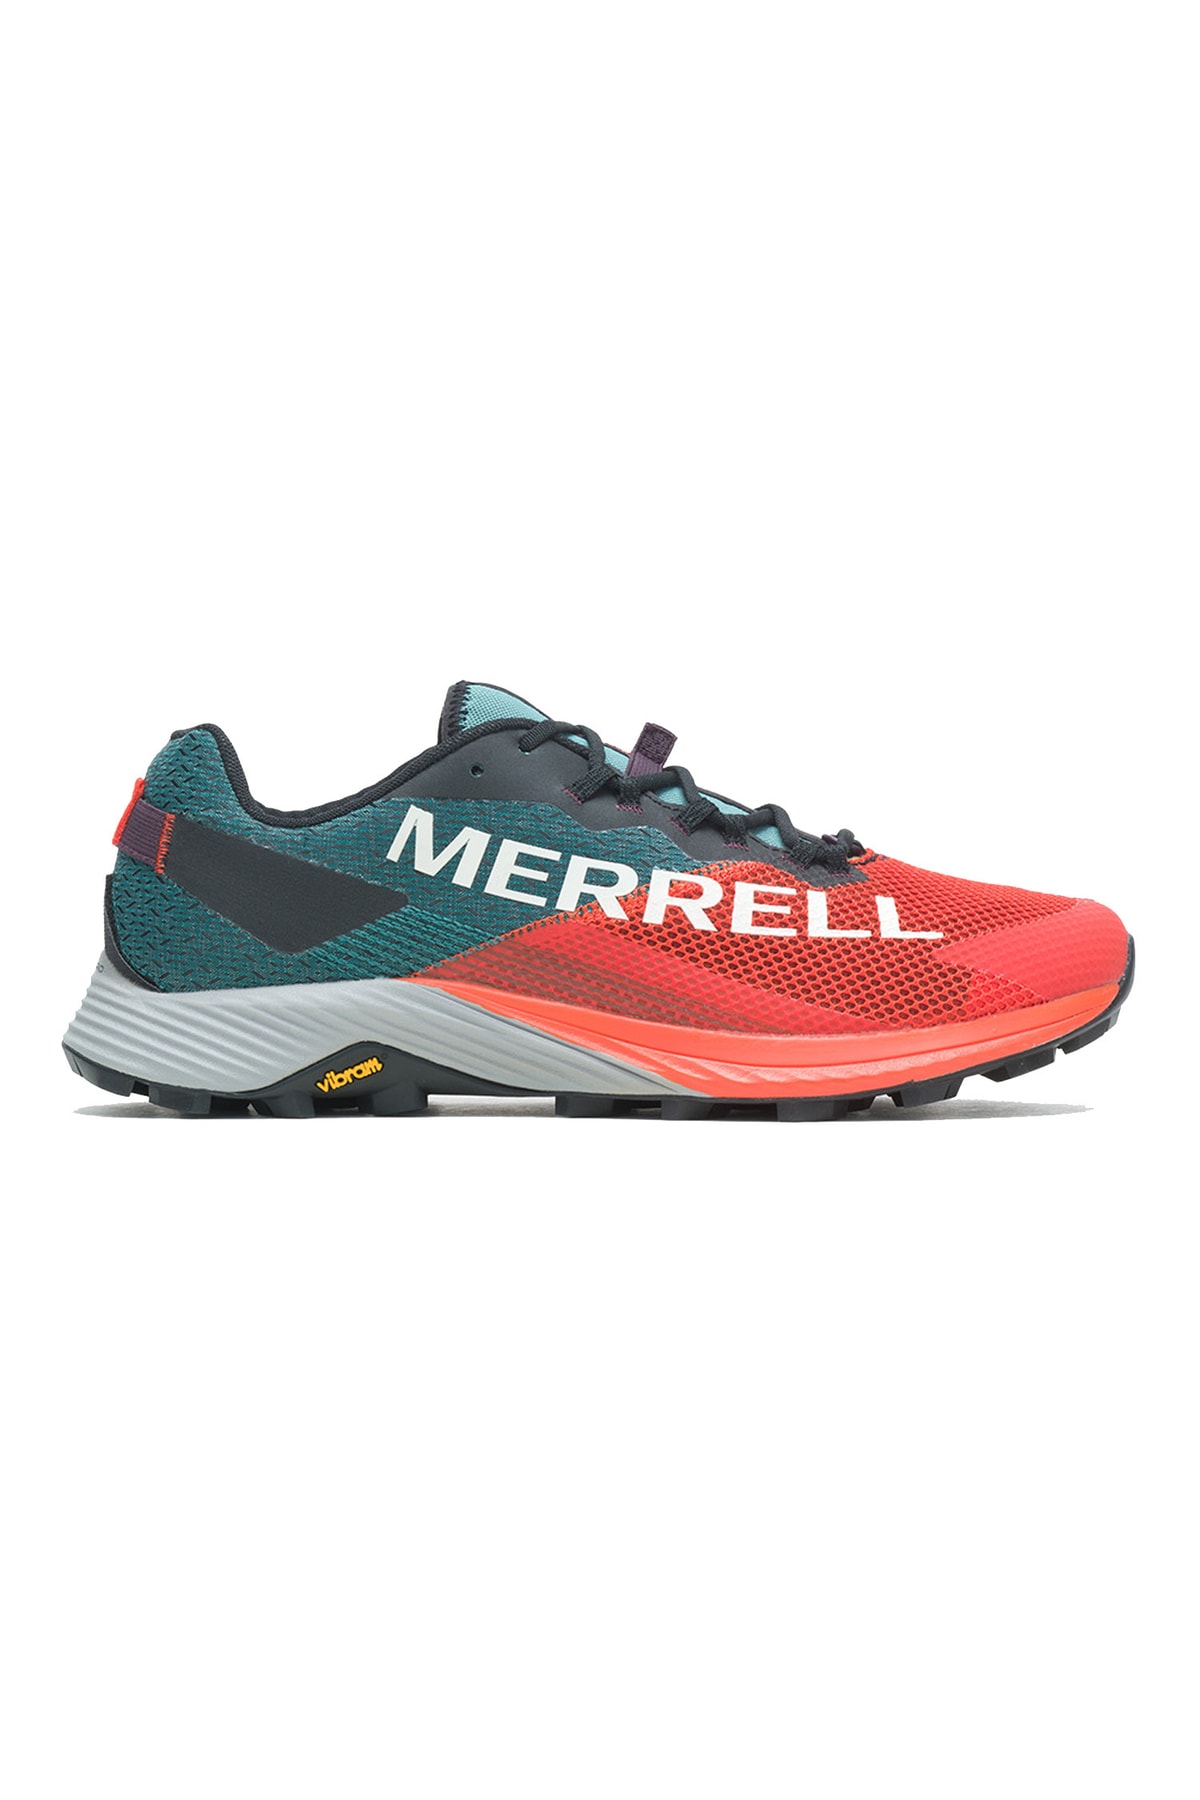 Merrell Mtl Long Sky Erkek Patika Koşu Ayakkabısı